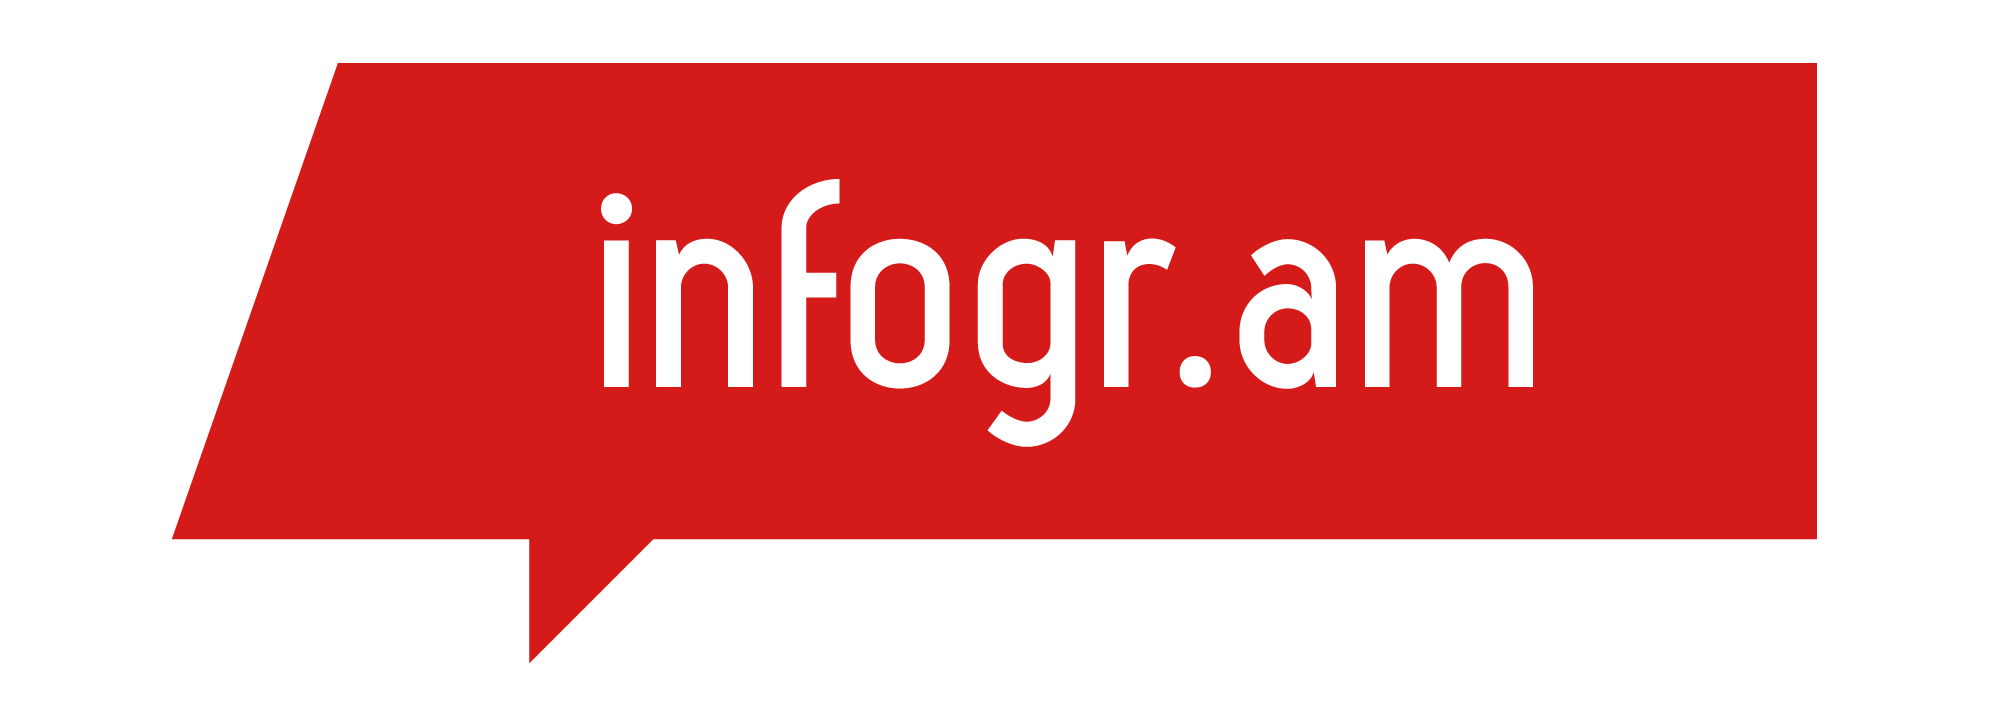 Infogram_Logo.png